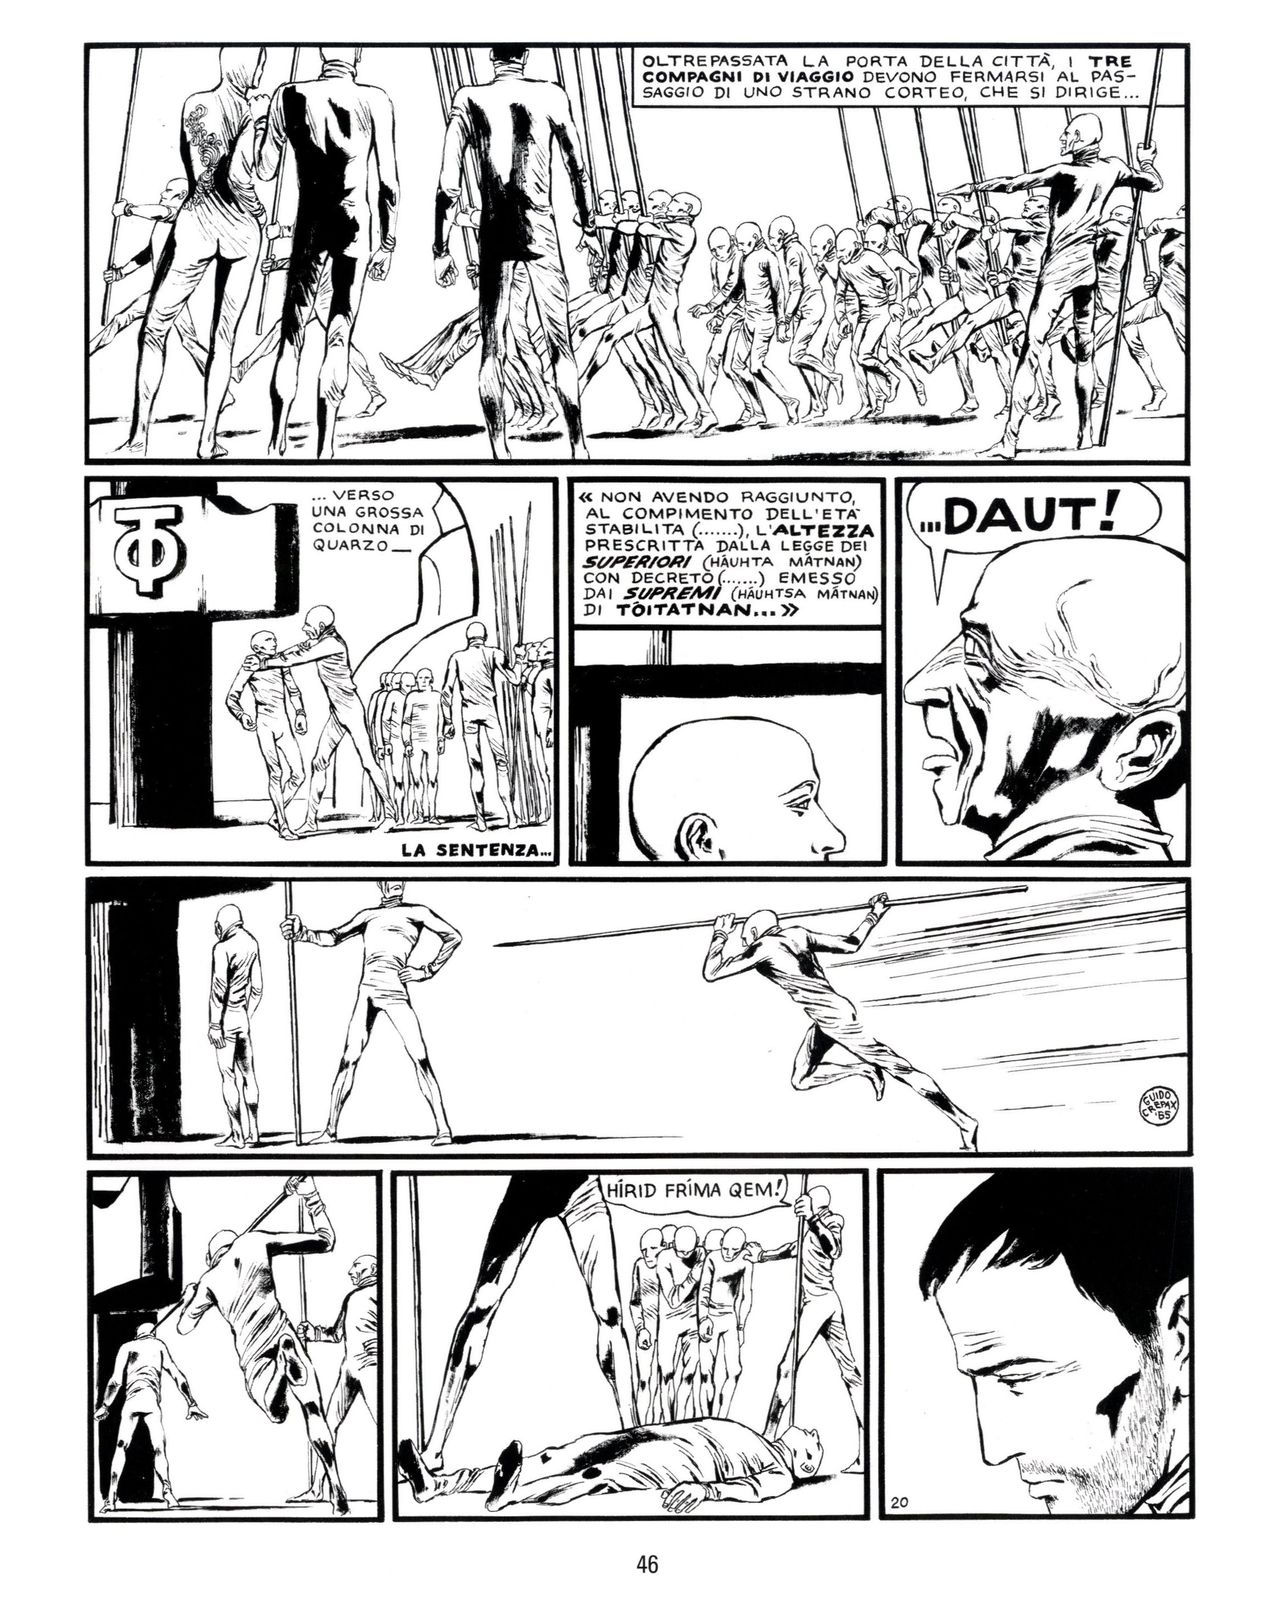 [Guido Crepax] Erotica Fumetti #25 : L'ascesa dei sotterranei : I cavalieri ciechi [Italian] 47